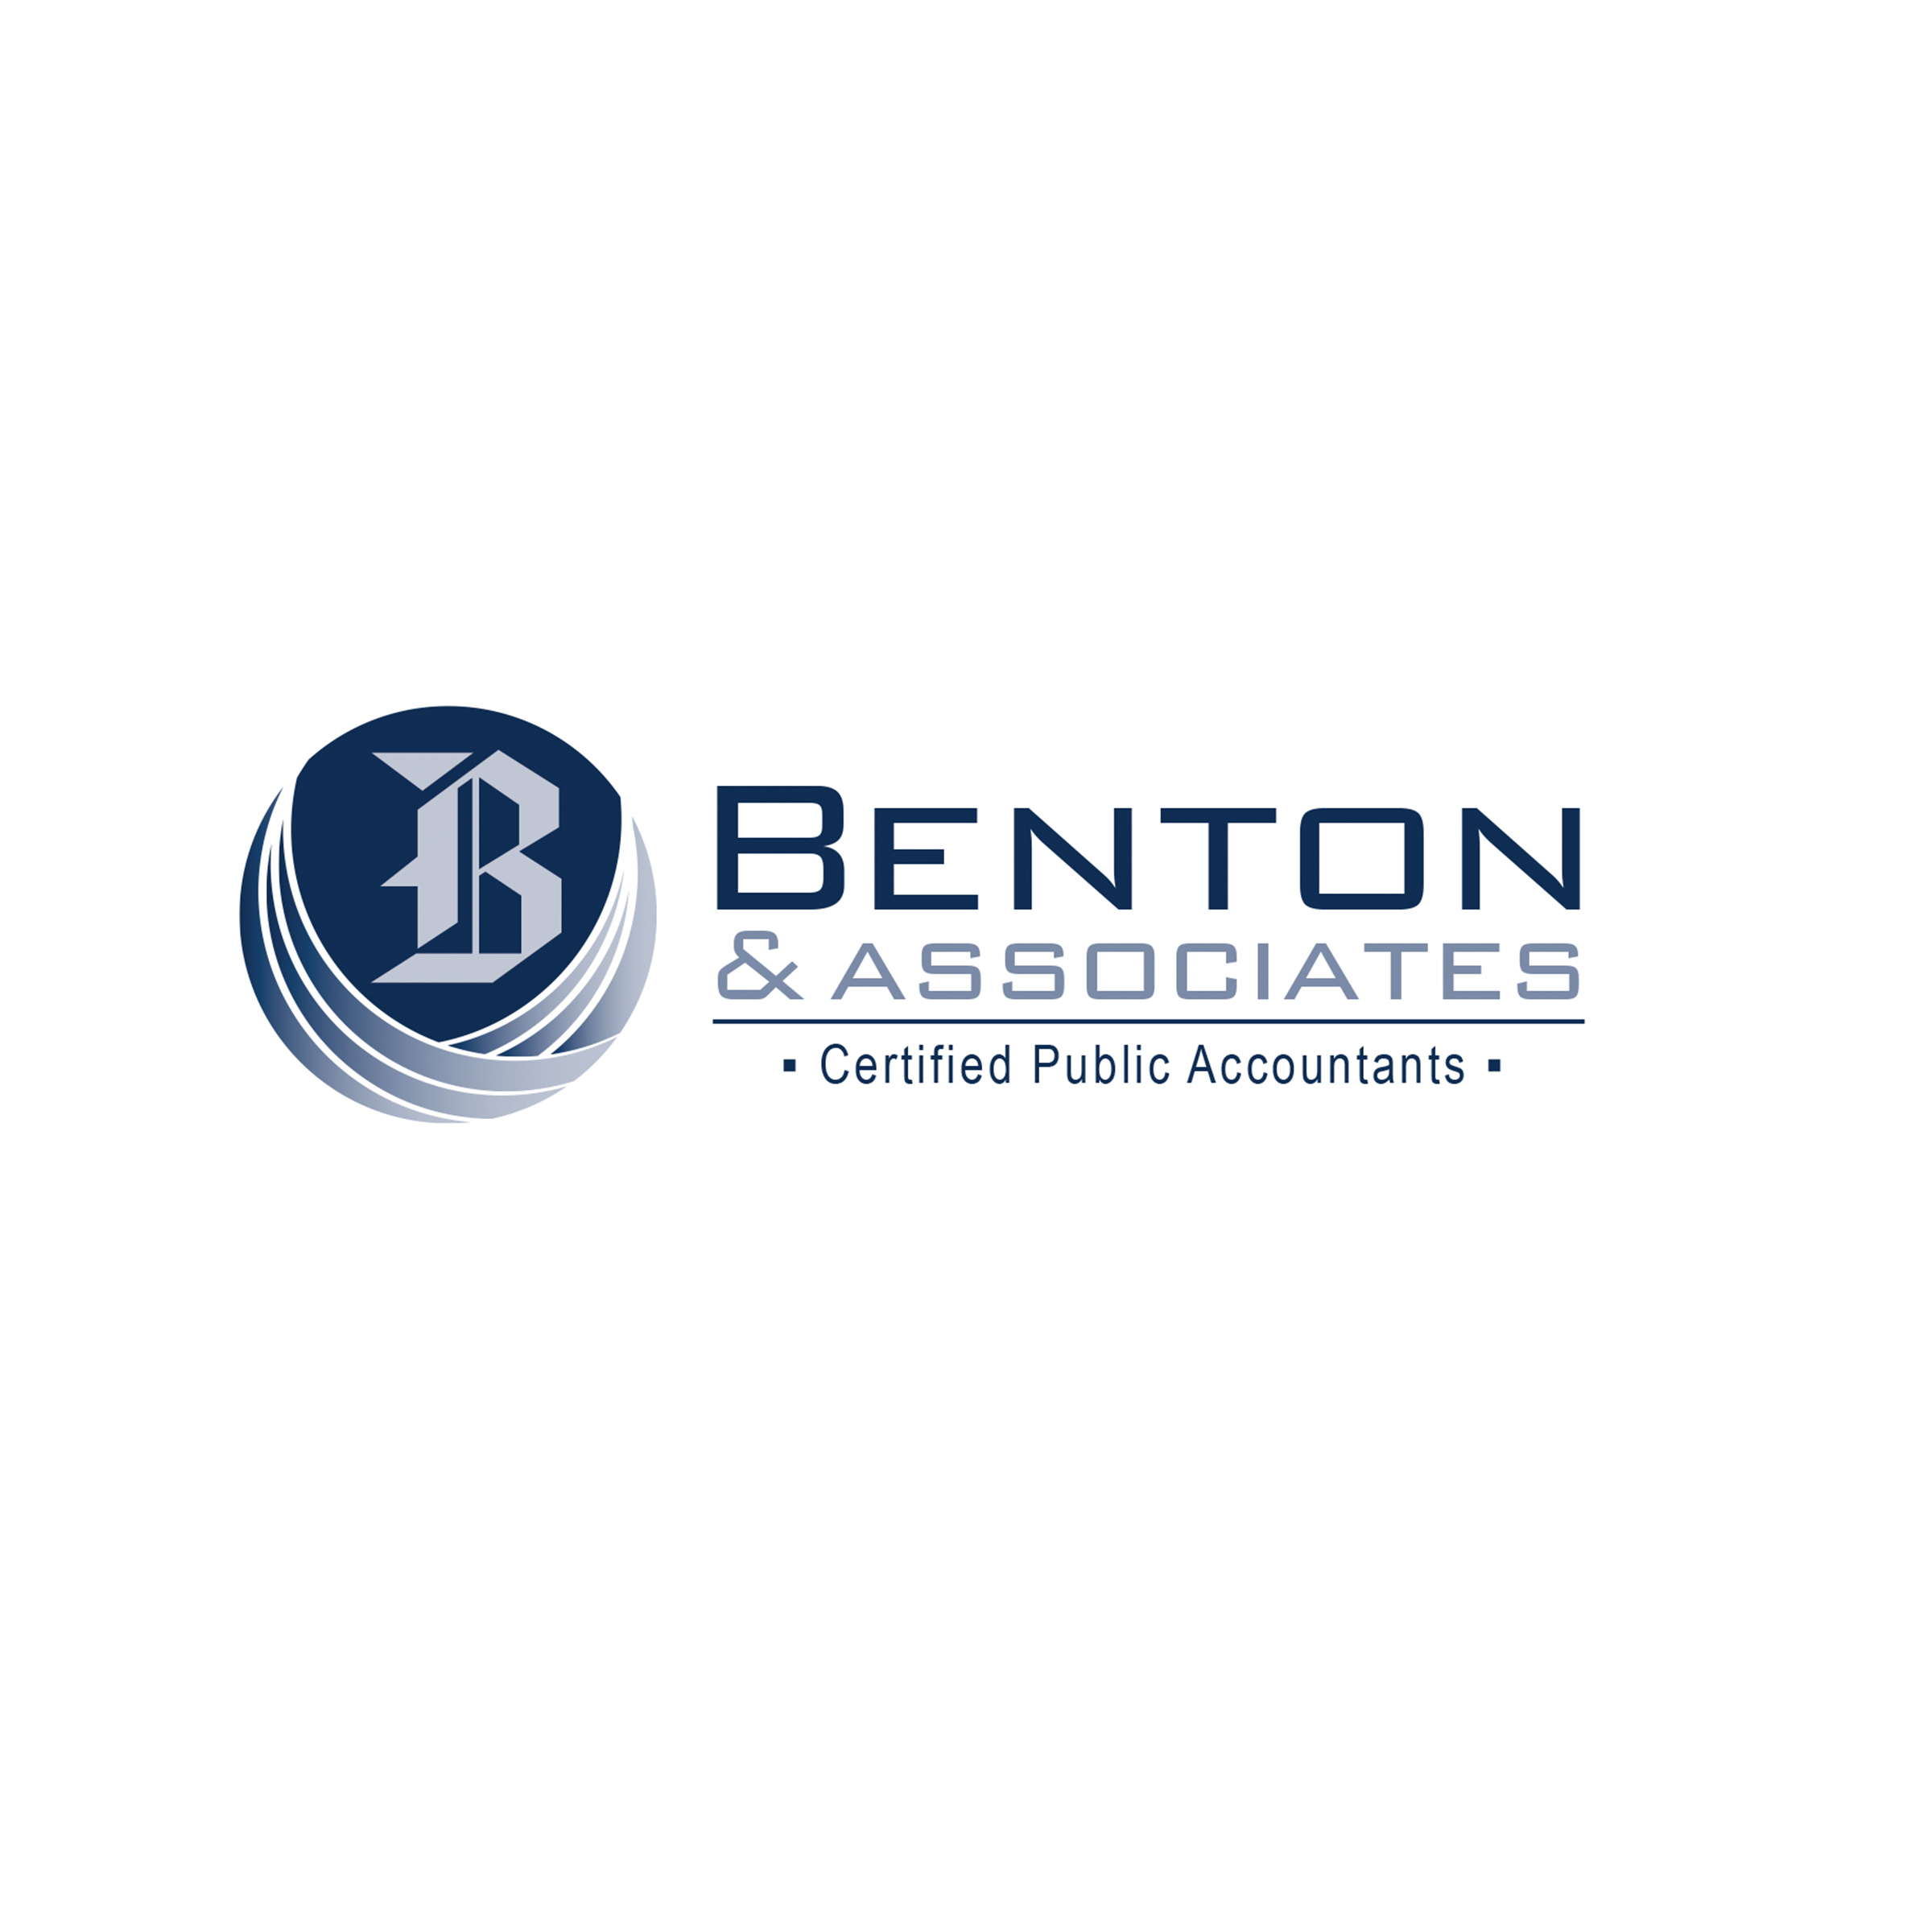 Benton & Associates